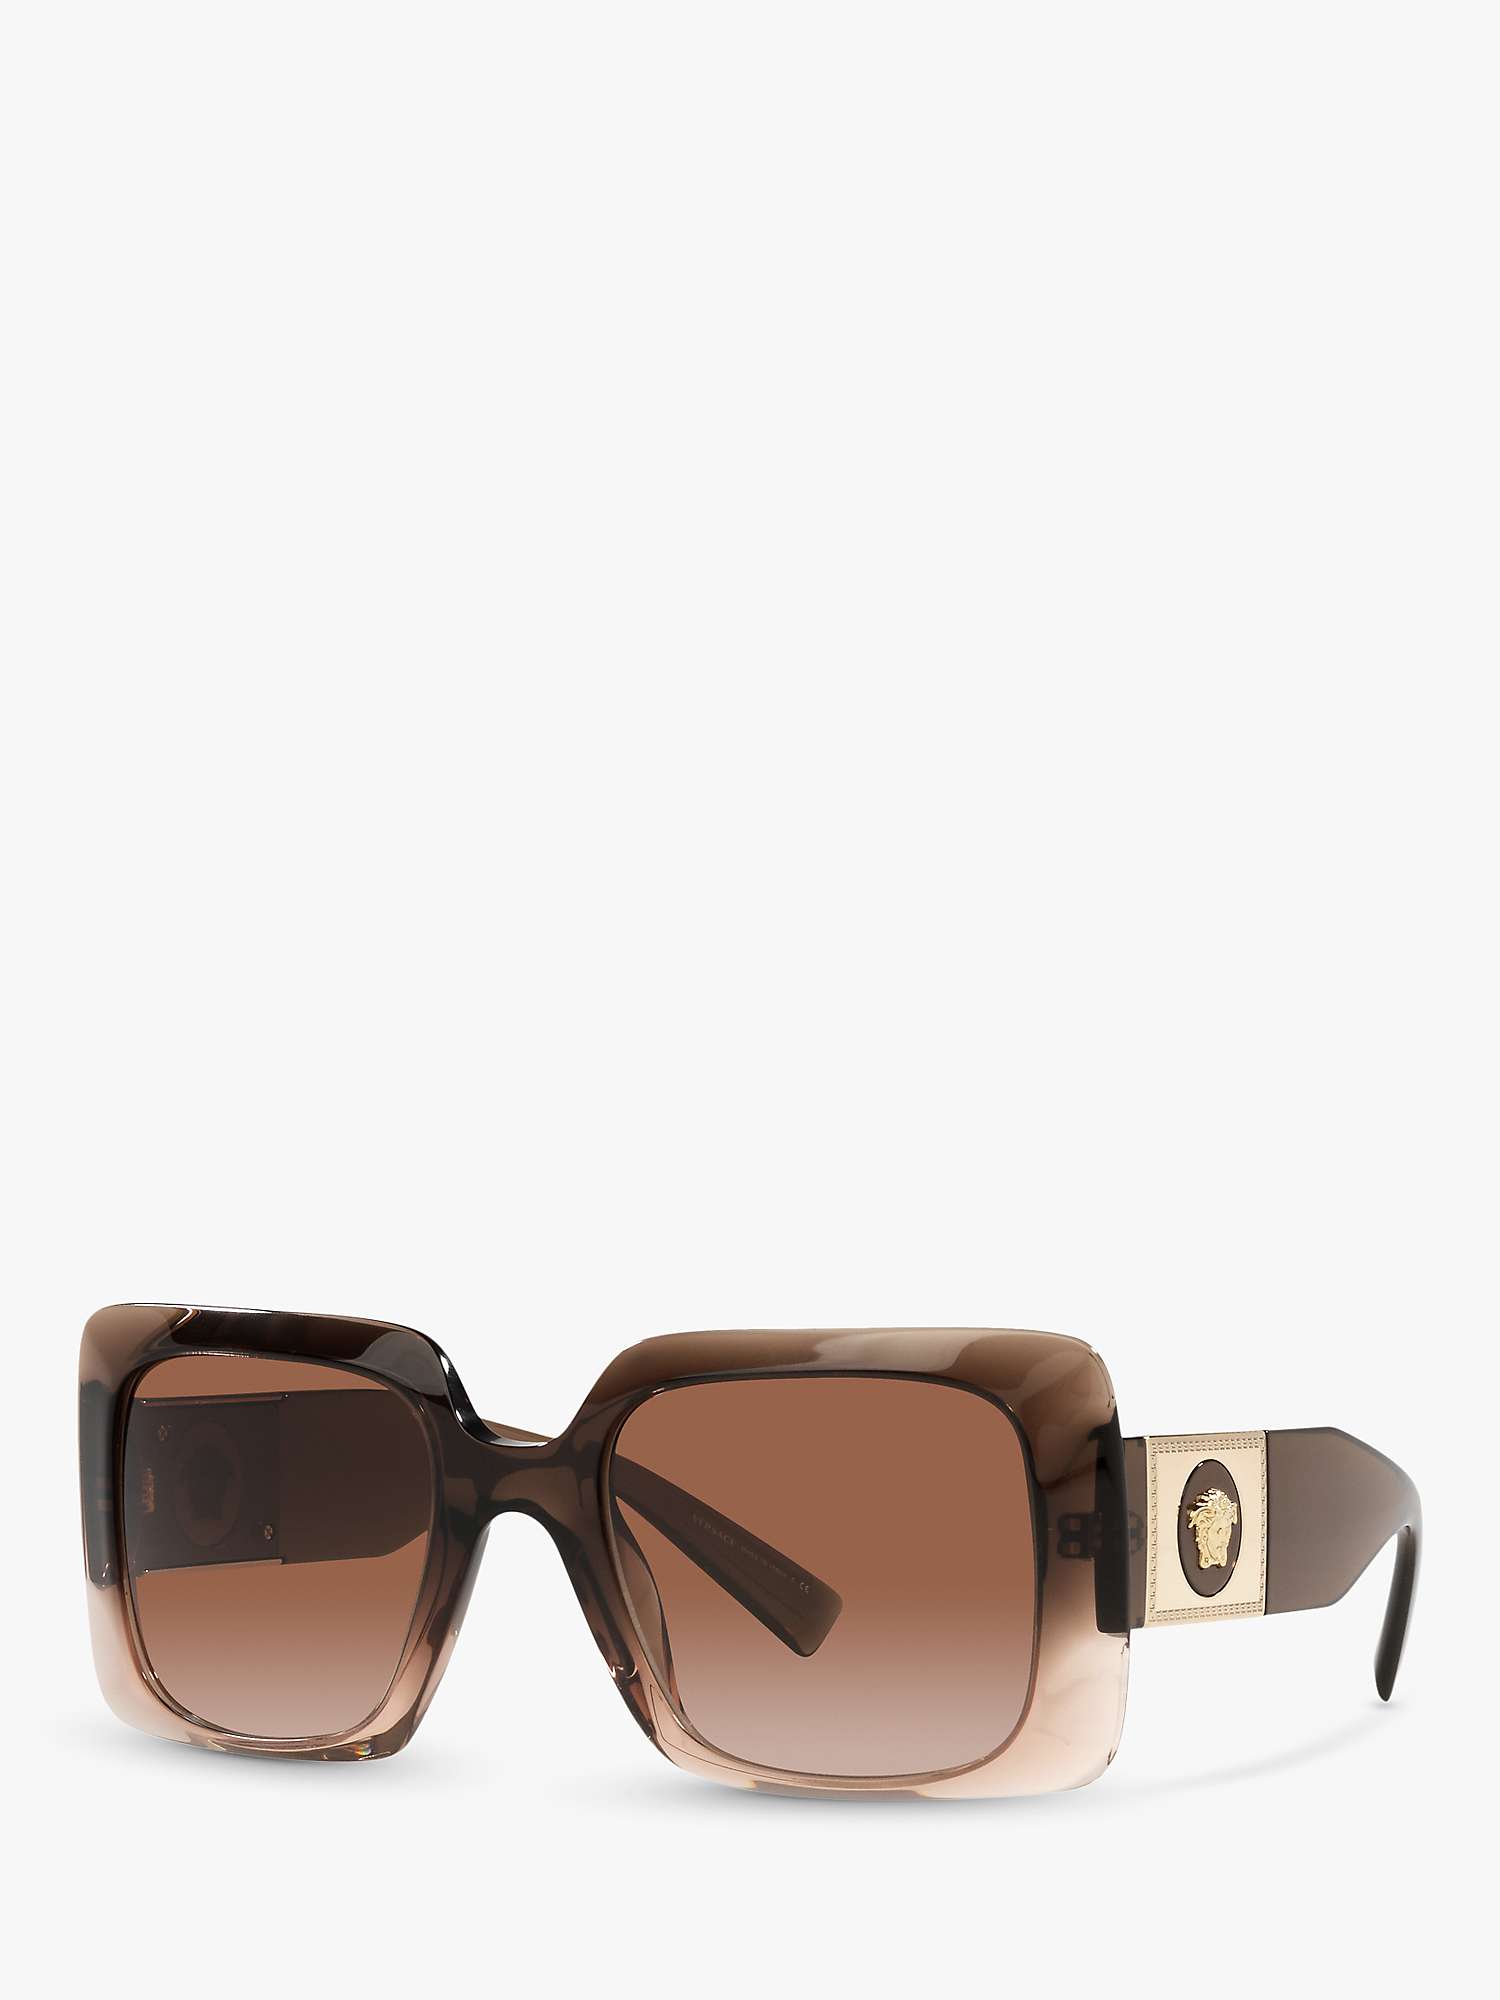 Buy Versace VE4405 Women's Chunky Rectangular Sunglasses, Transparenet Brown/Brown Gradient Online at johnlewis.com